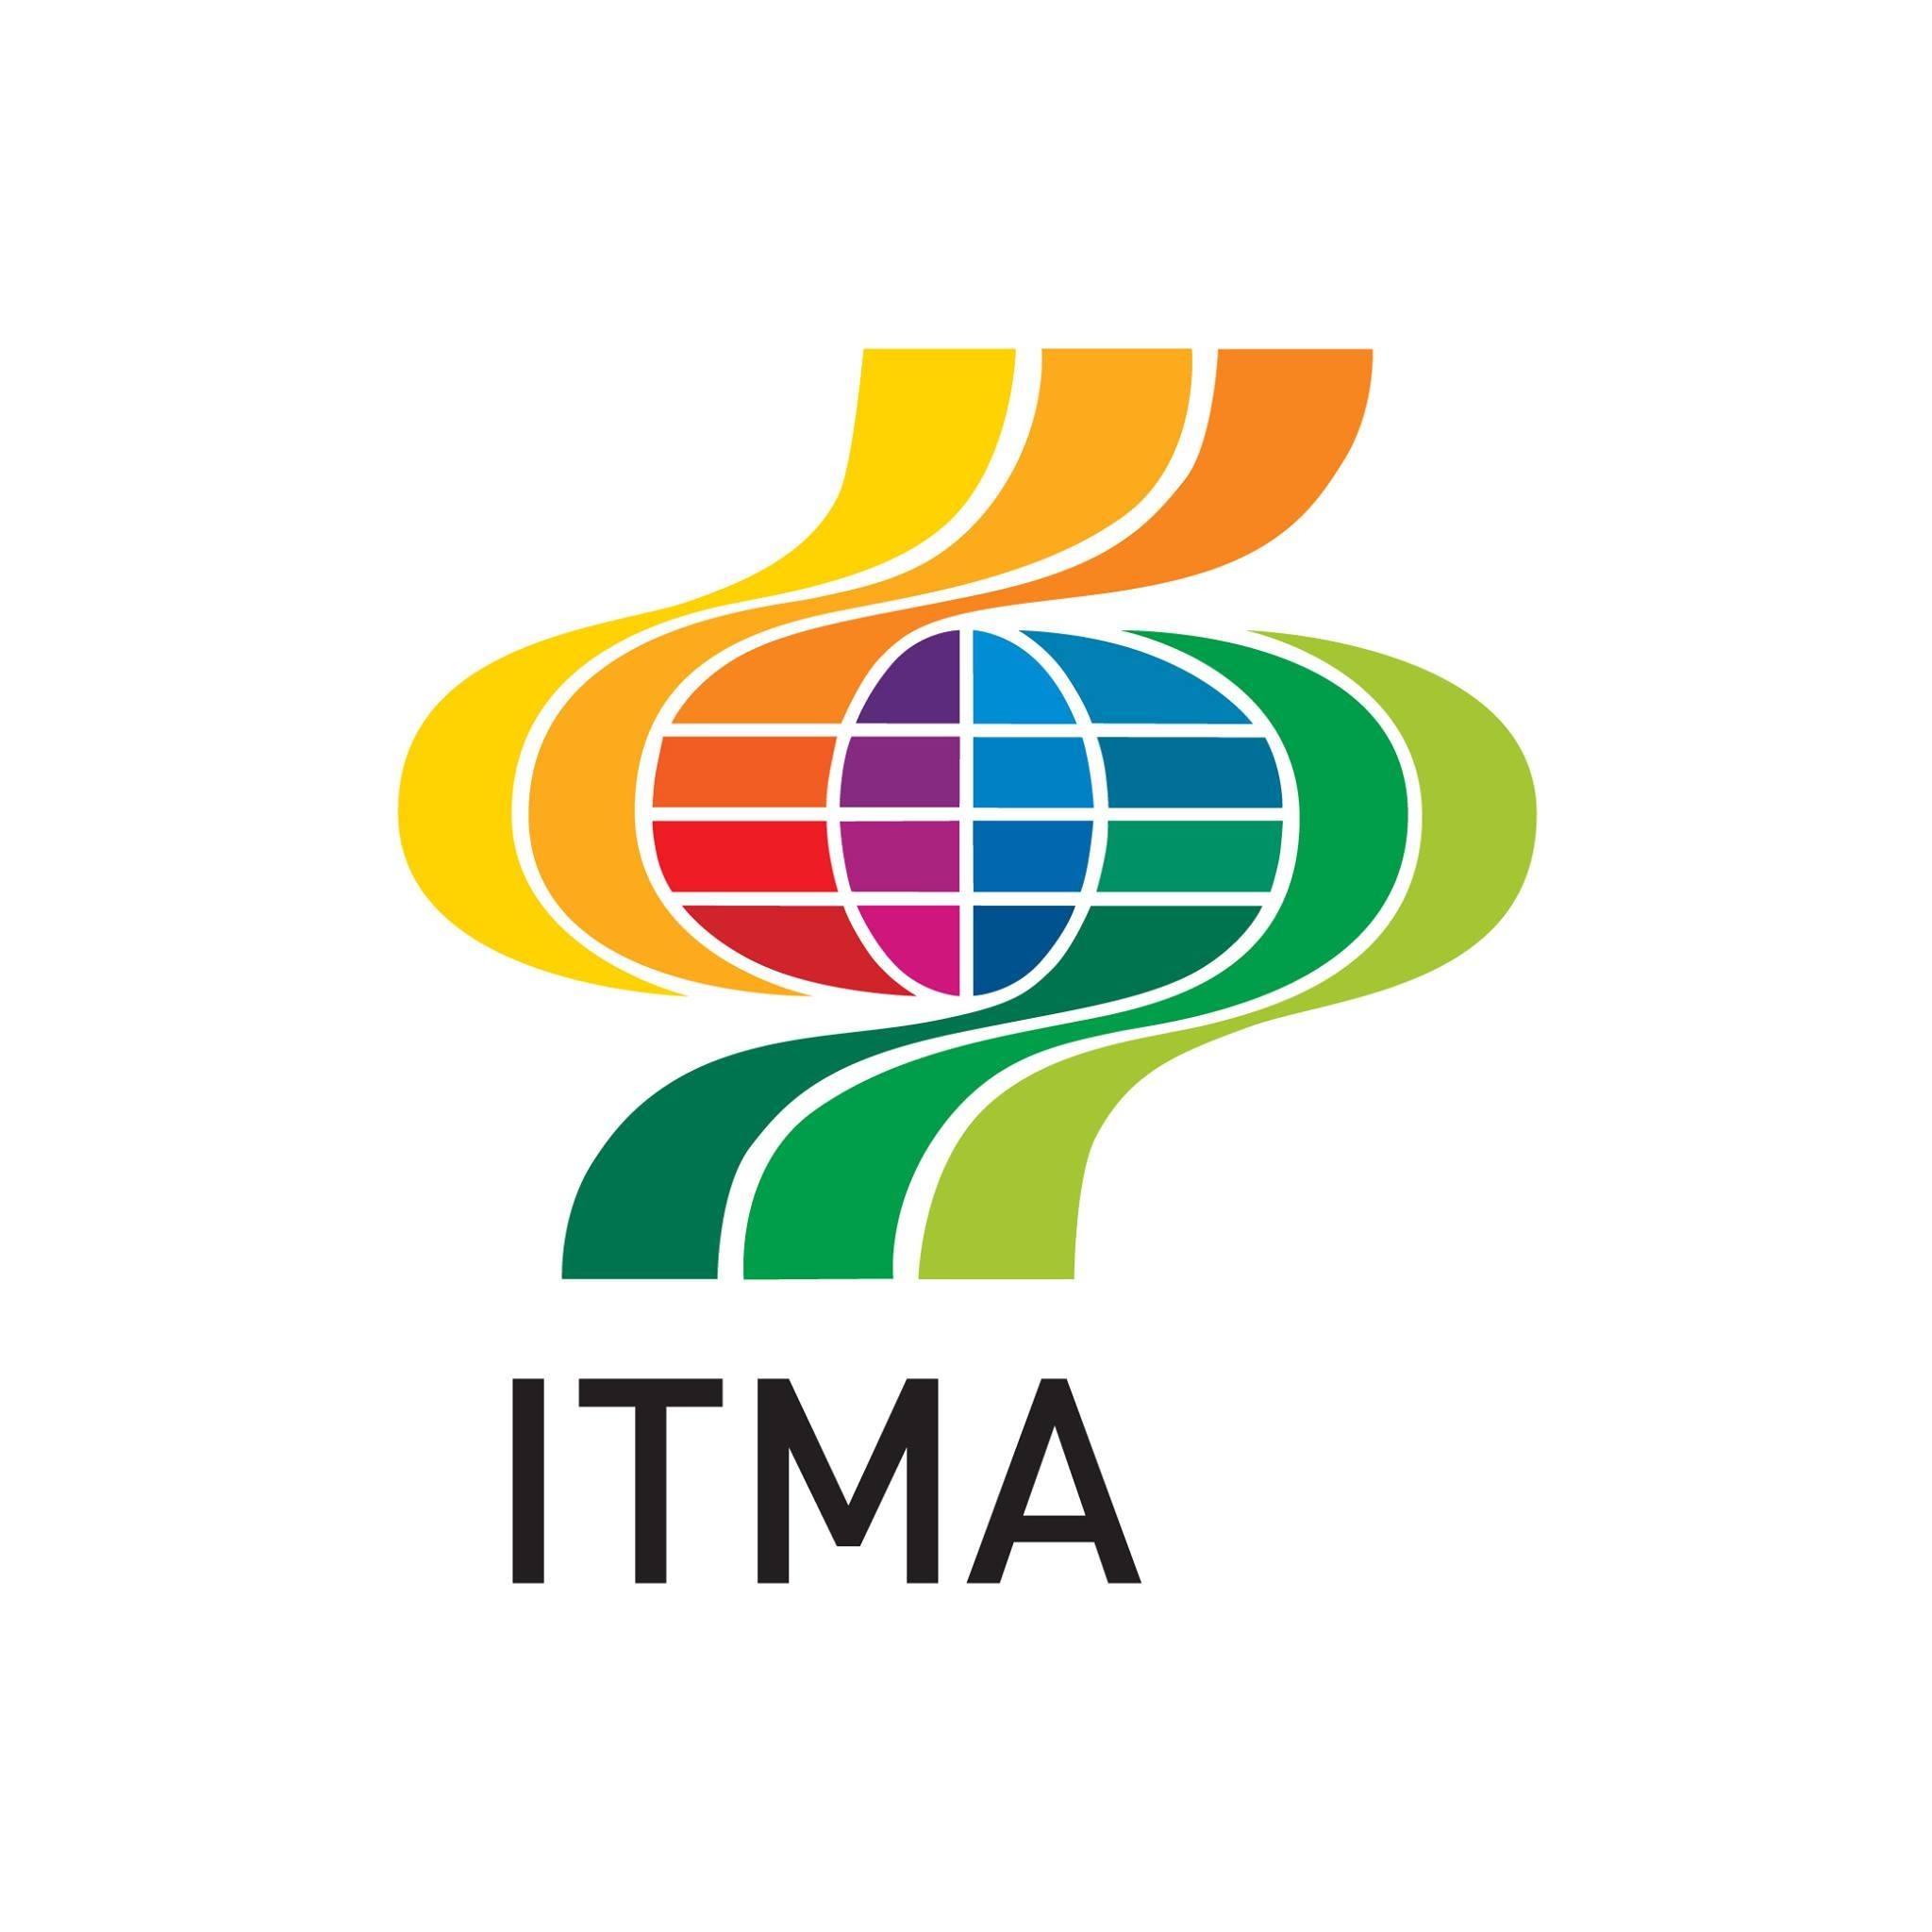 Let's meet at ITMA